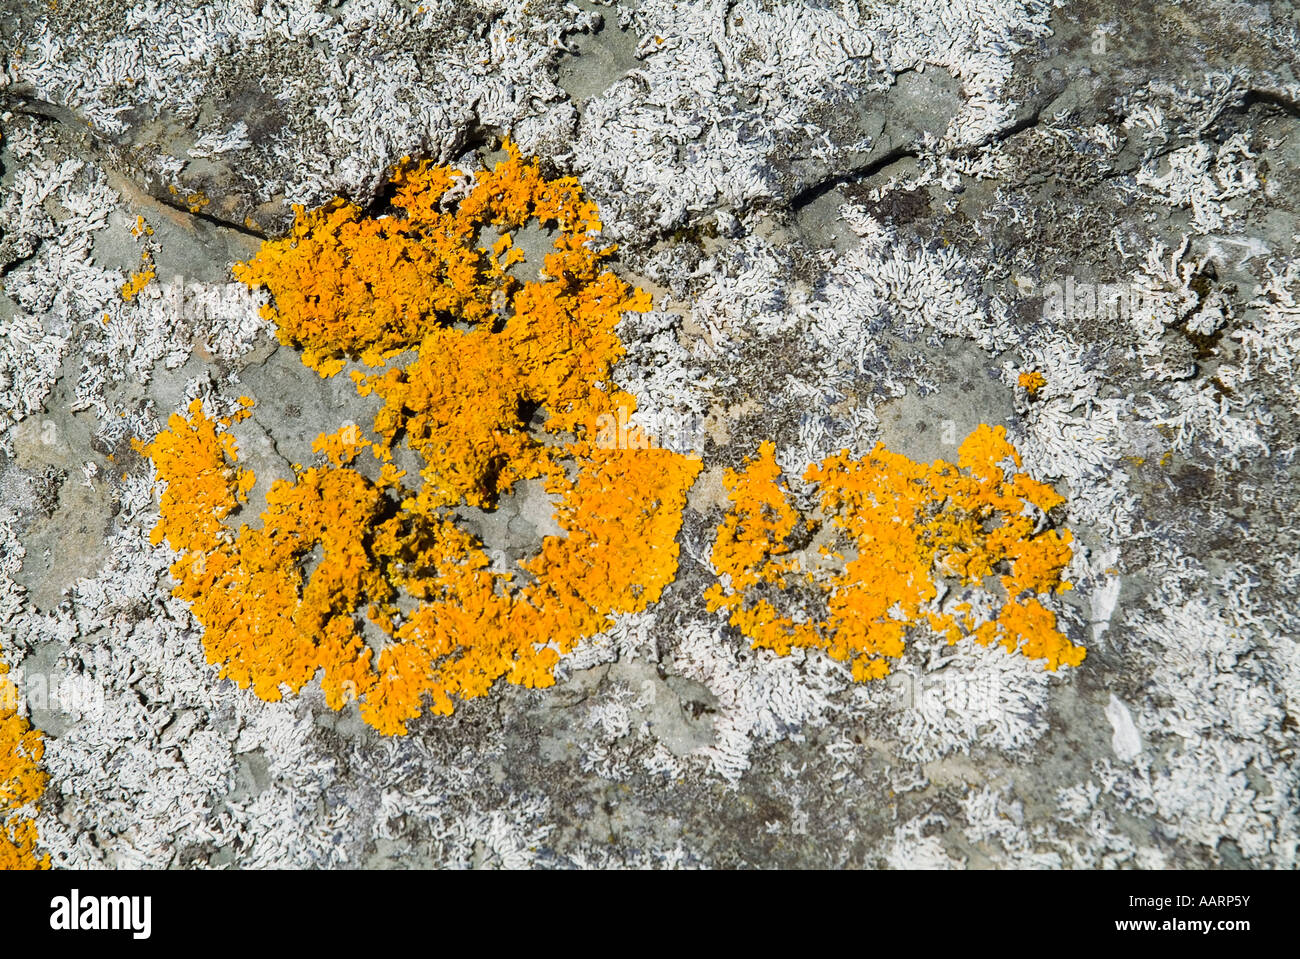 dh  LICHEN UK Lichen on boulder Lecanora Xanthoria parietina Lichina confinis stone alga fungus yellow fungi rock Stock Photo